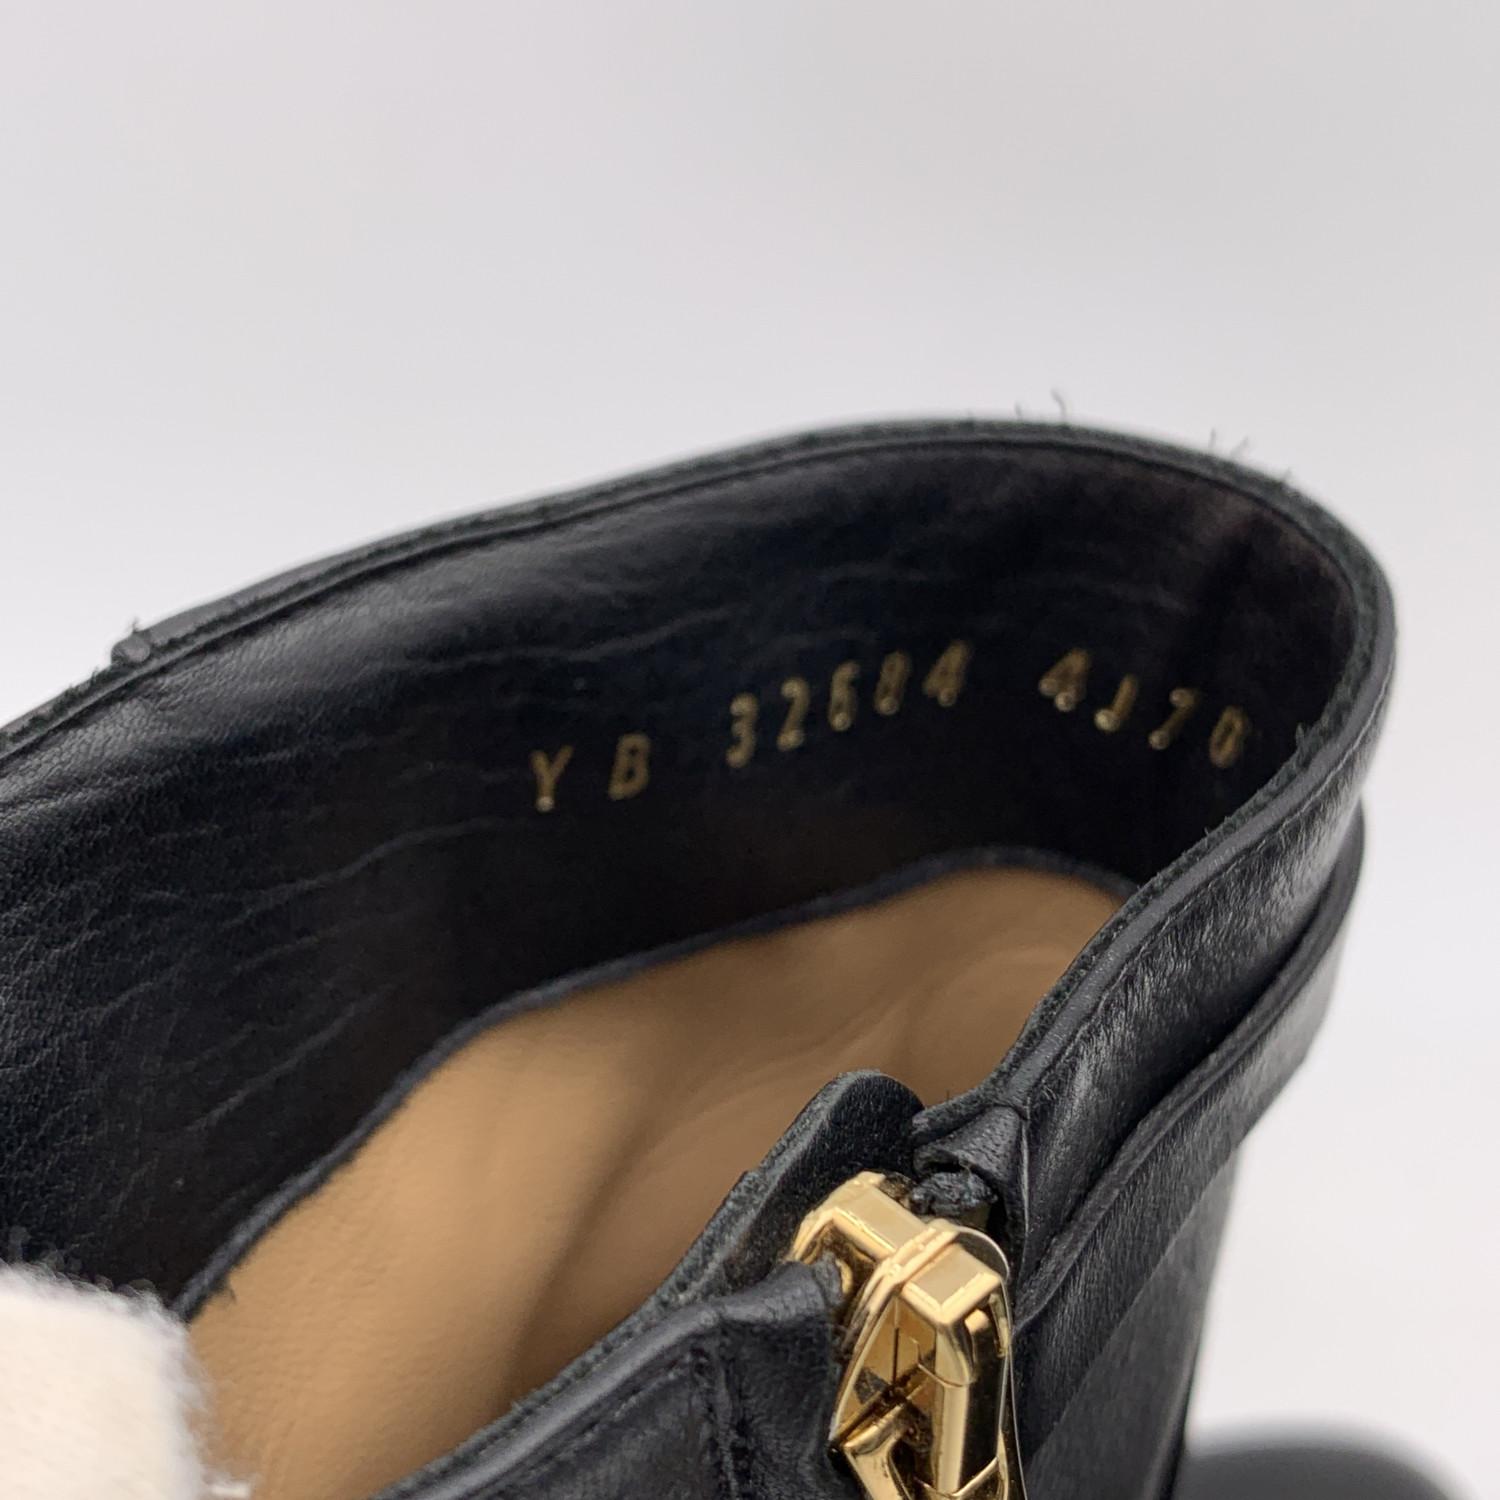 Women's Salvatore Ferragamo Black Leather Wedges Ankle Boots Shoes Size 6.5 C